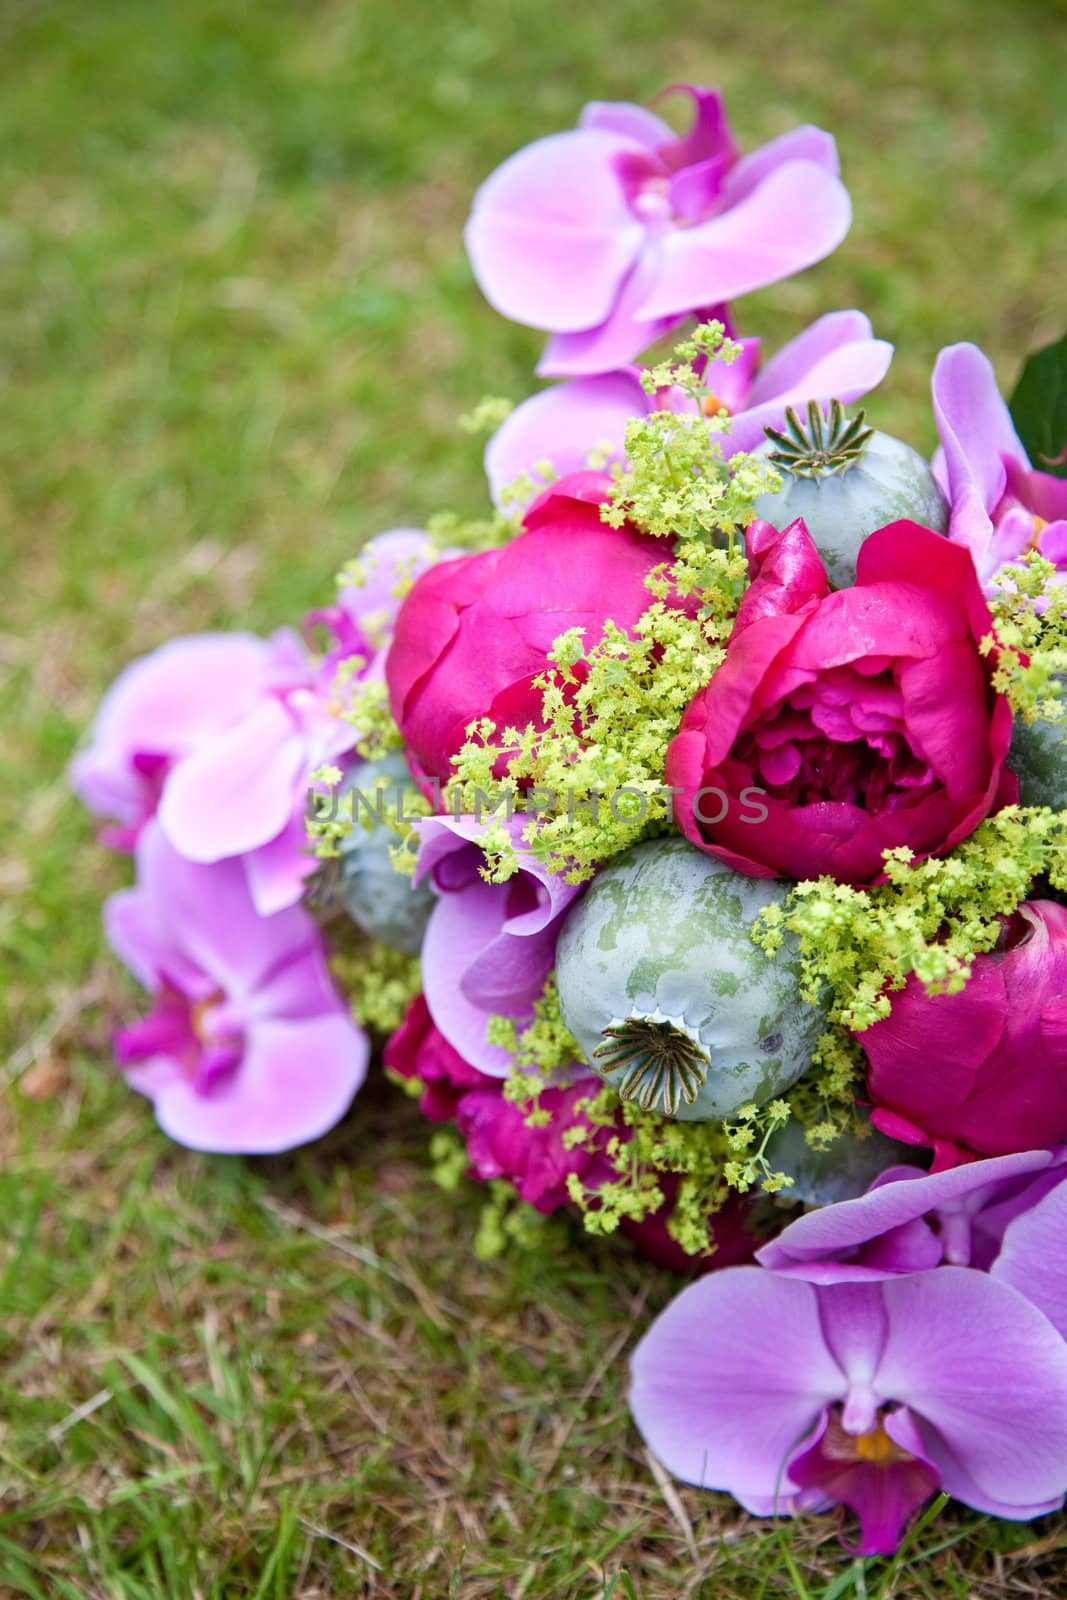 Colorful wedding bouquet by Fotosmurf